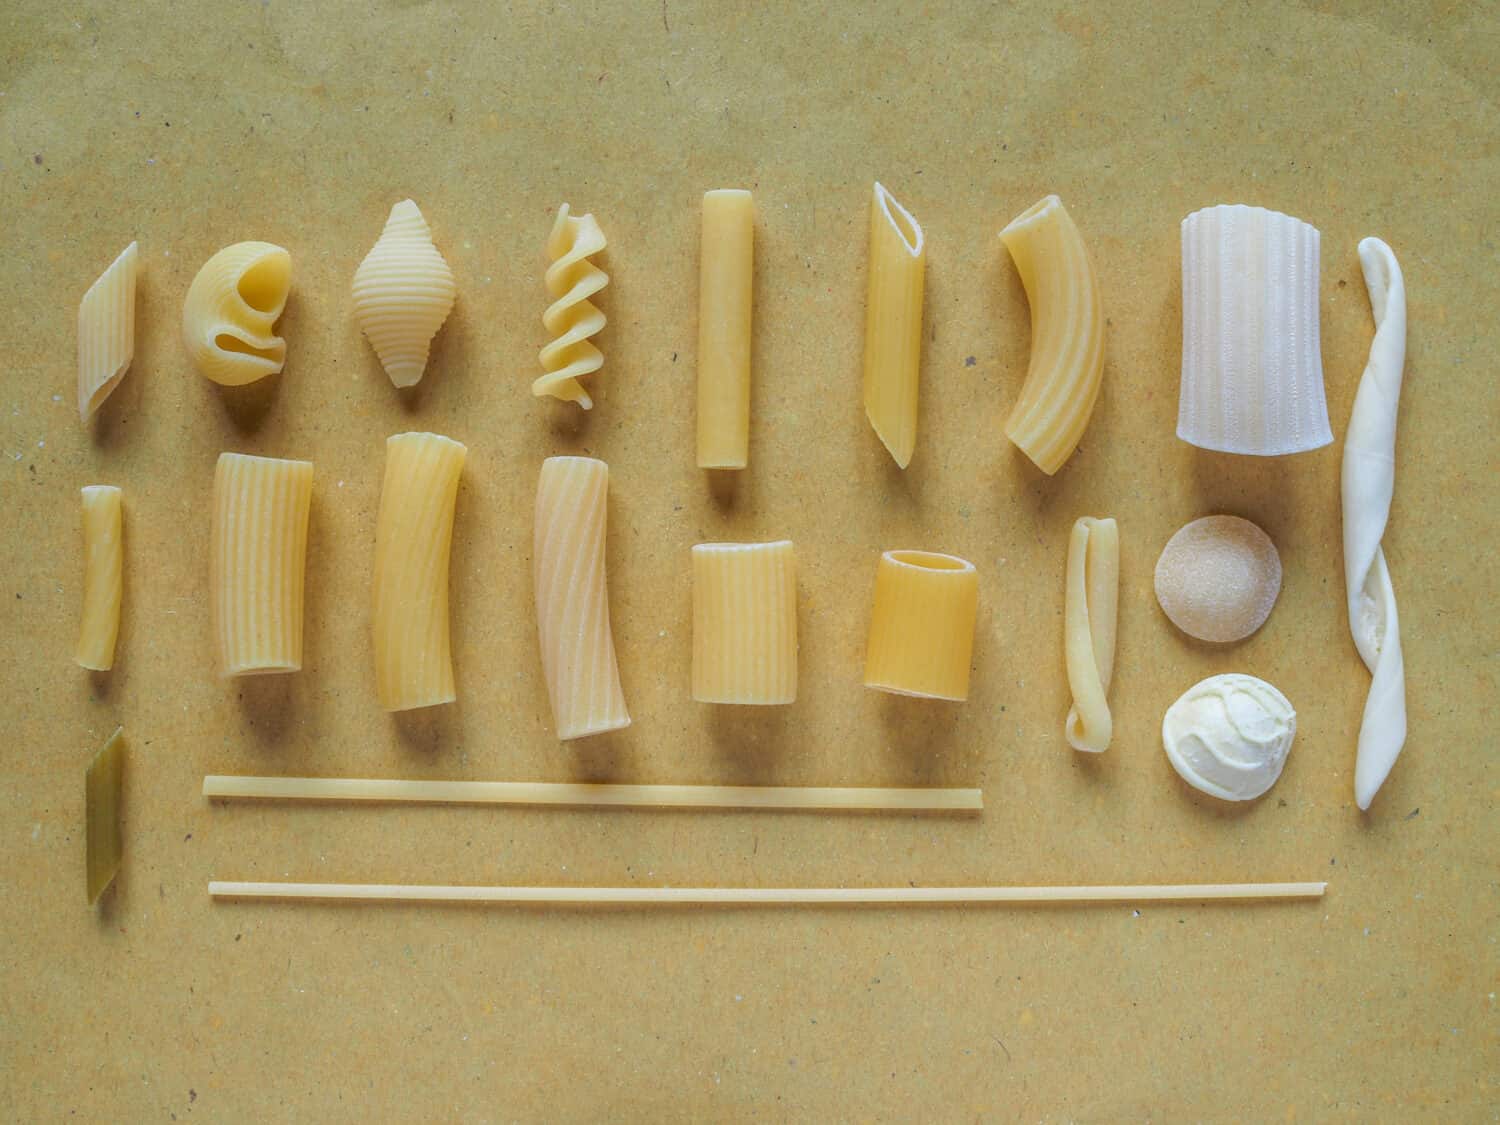 Many different types of Italian pasta including penne macaroni (maccheroni) fusilli spaghetti trenette (linguine) orecchiette tortiglioni conchiglie (shells)